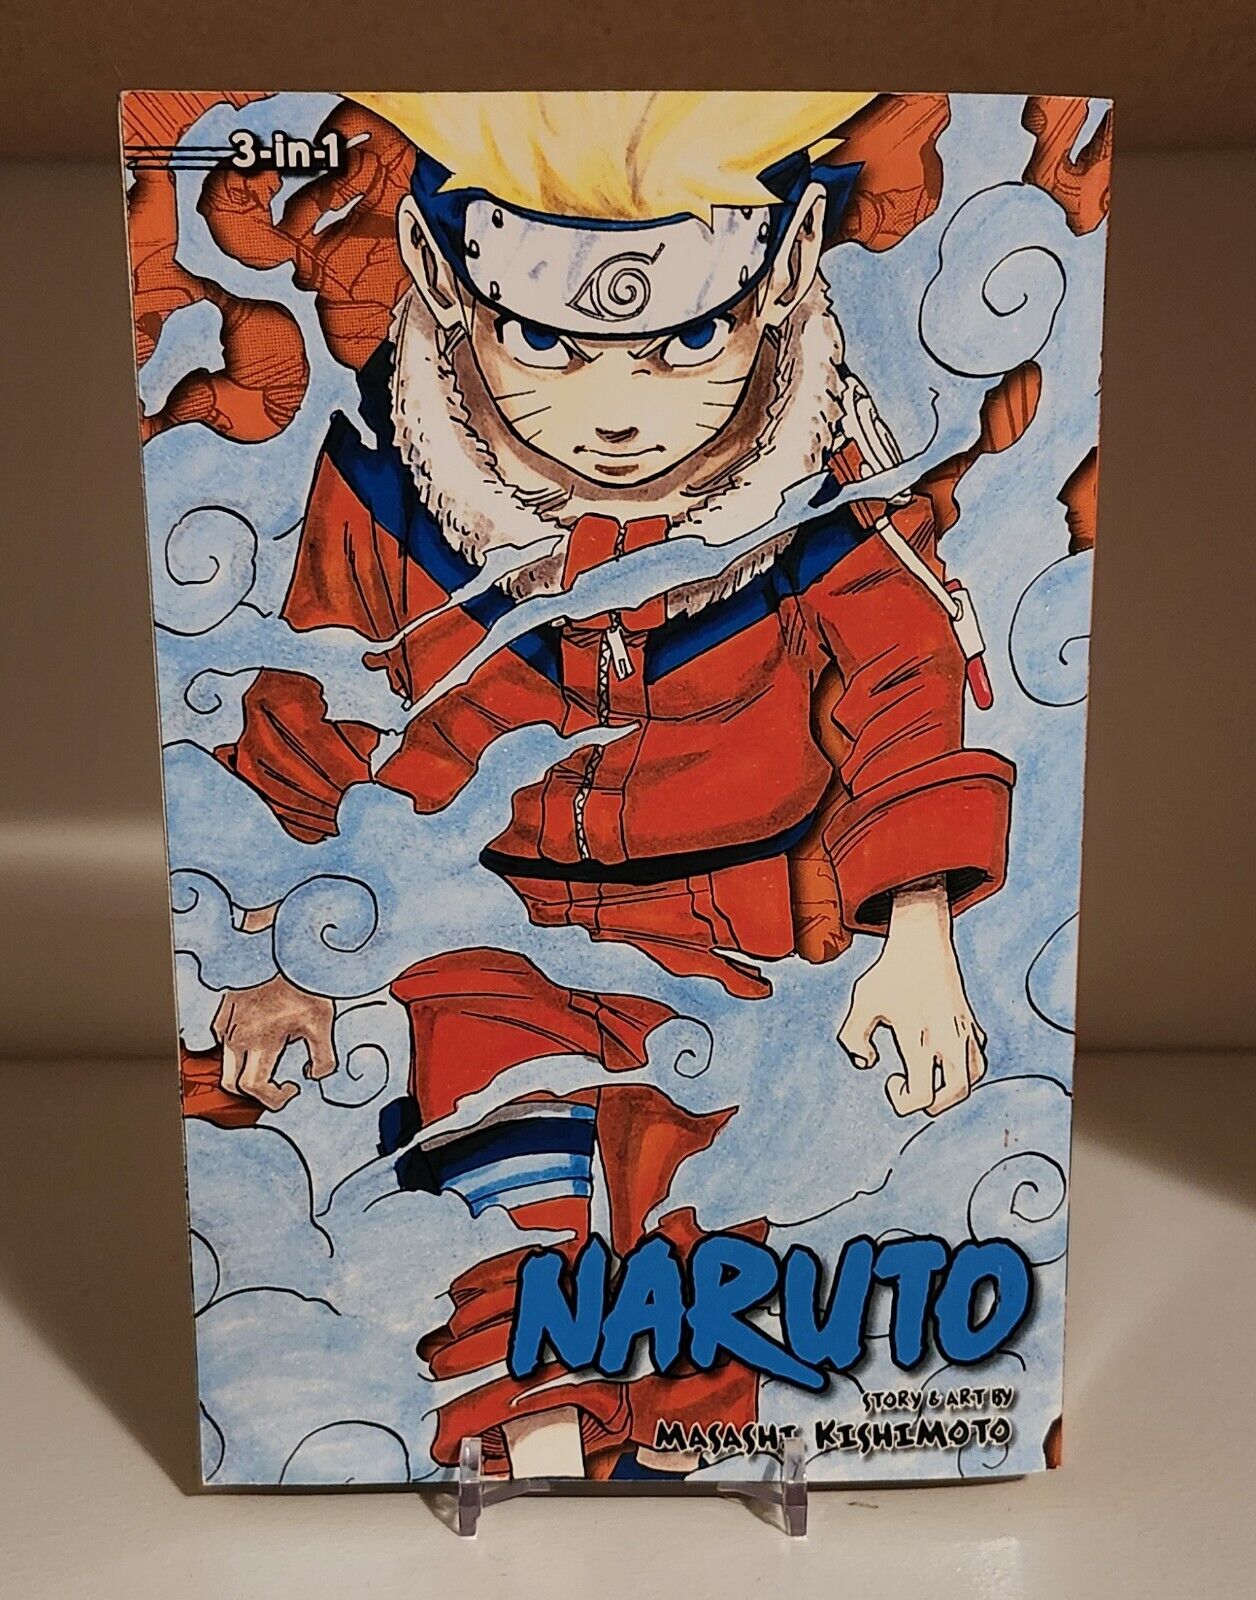 Naruto Manga 3 in 1 Volume 1-2-3 English